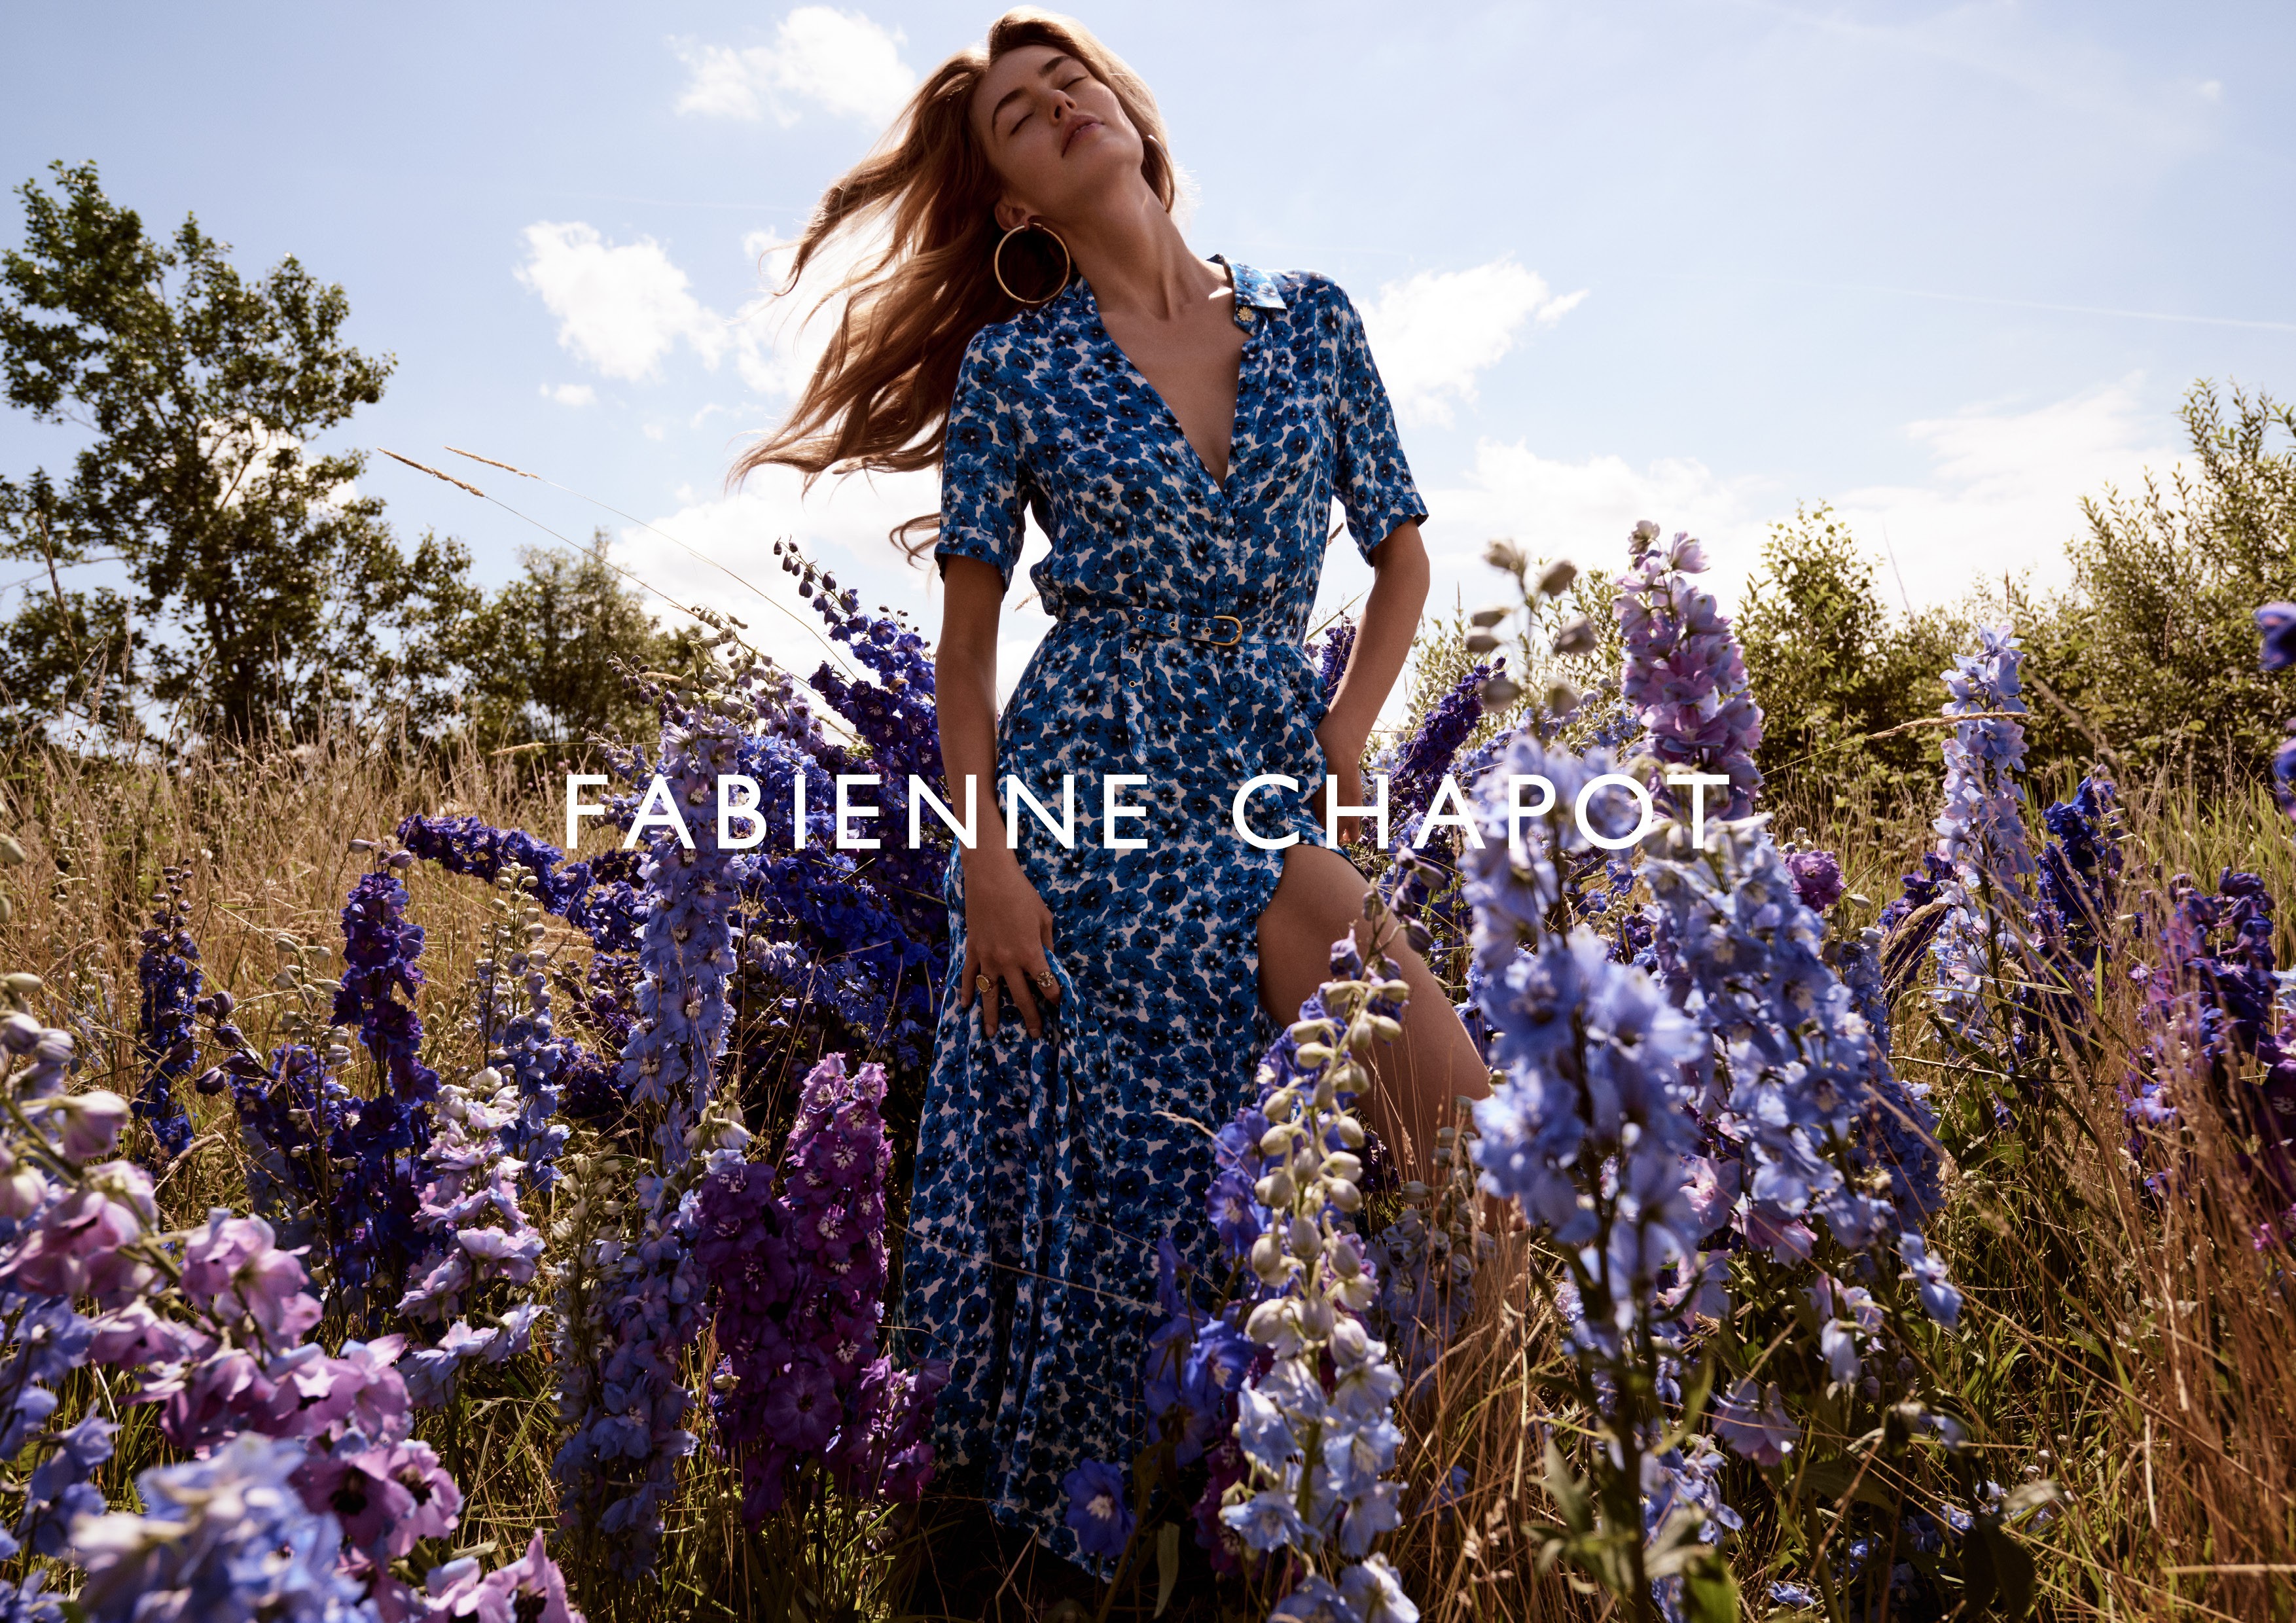 Fabienne chapot kjole blomstereng blus norge sko